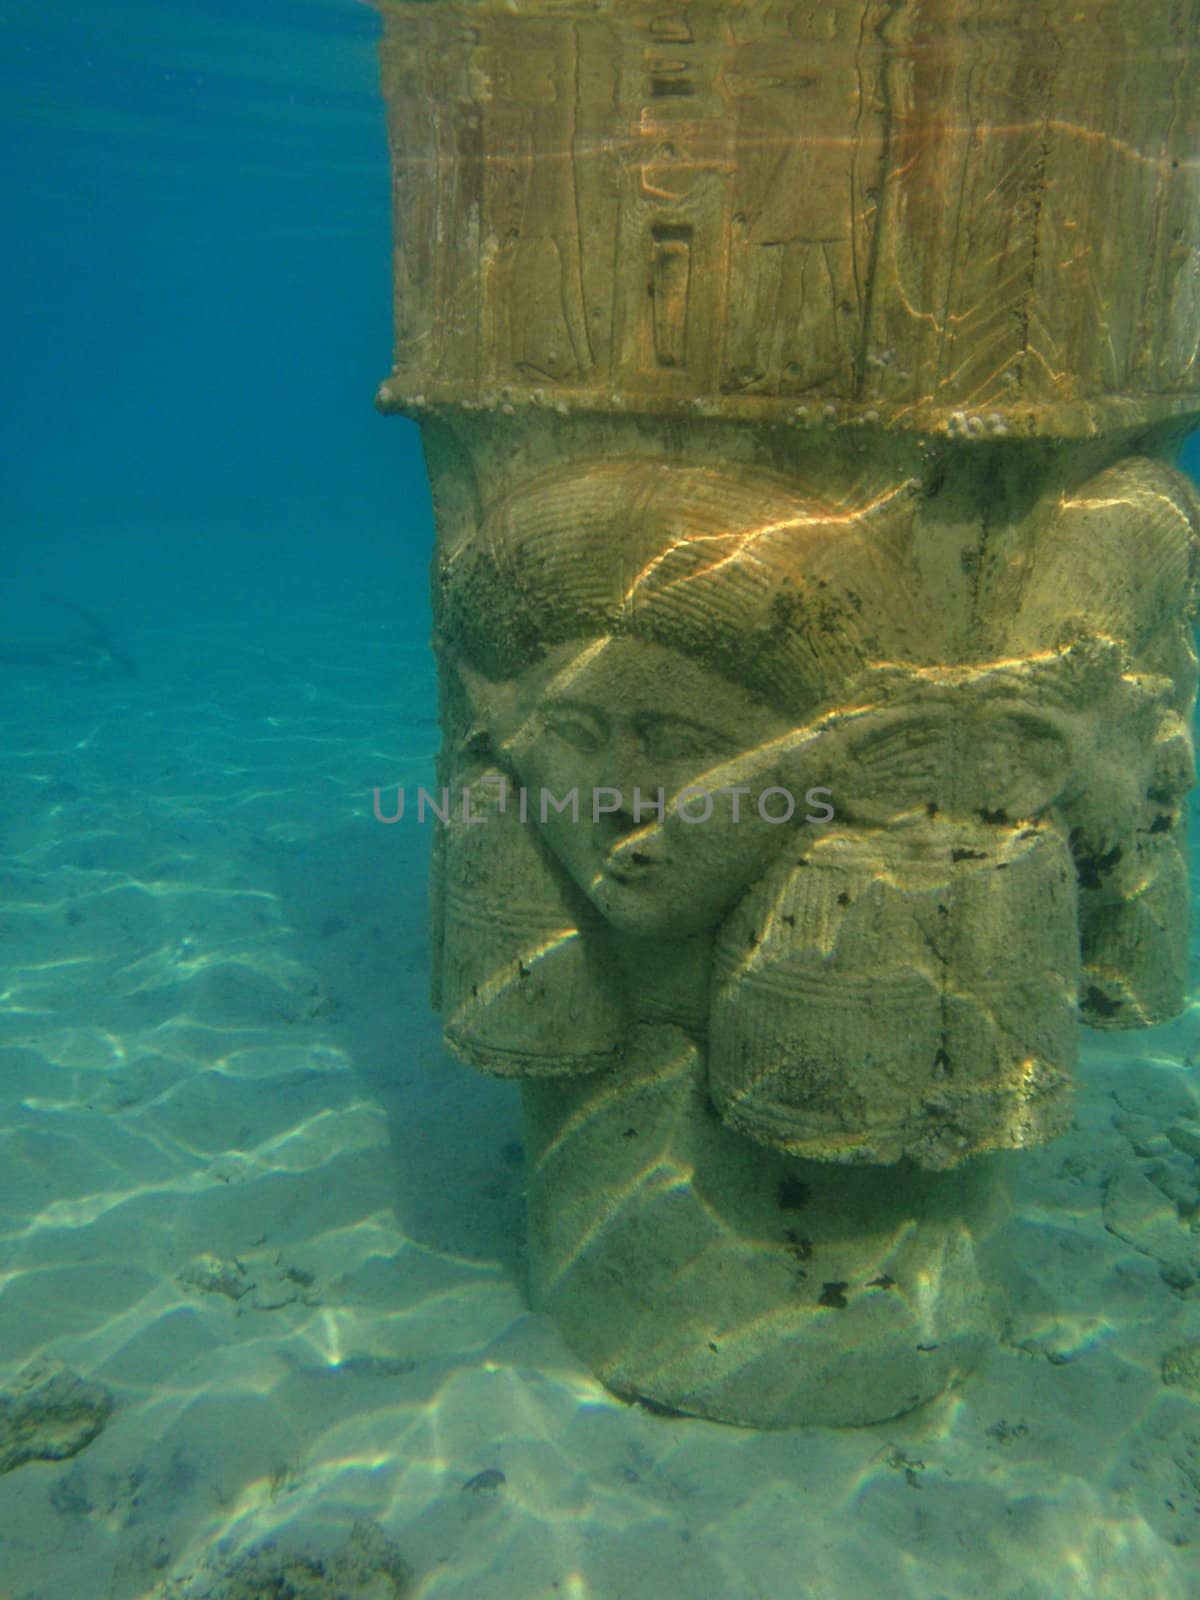 Underwater monument by georg777